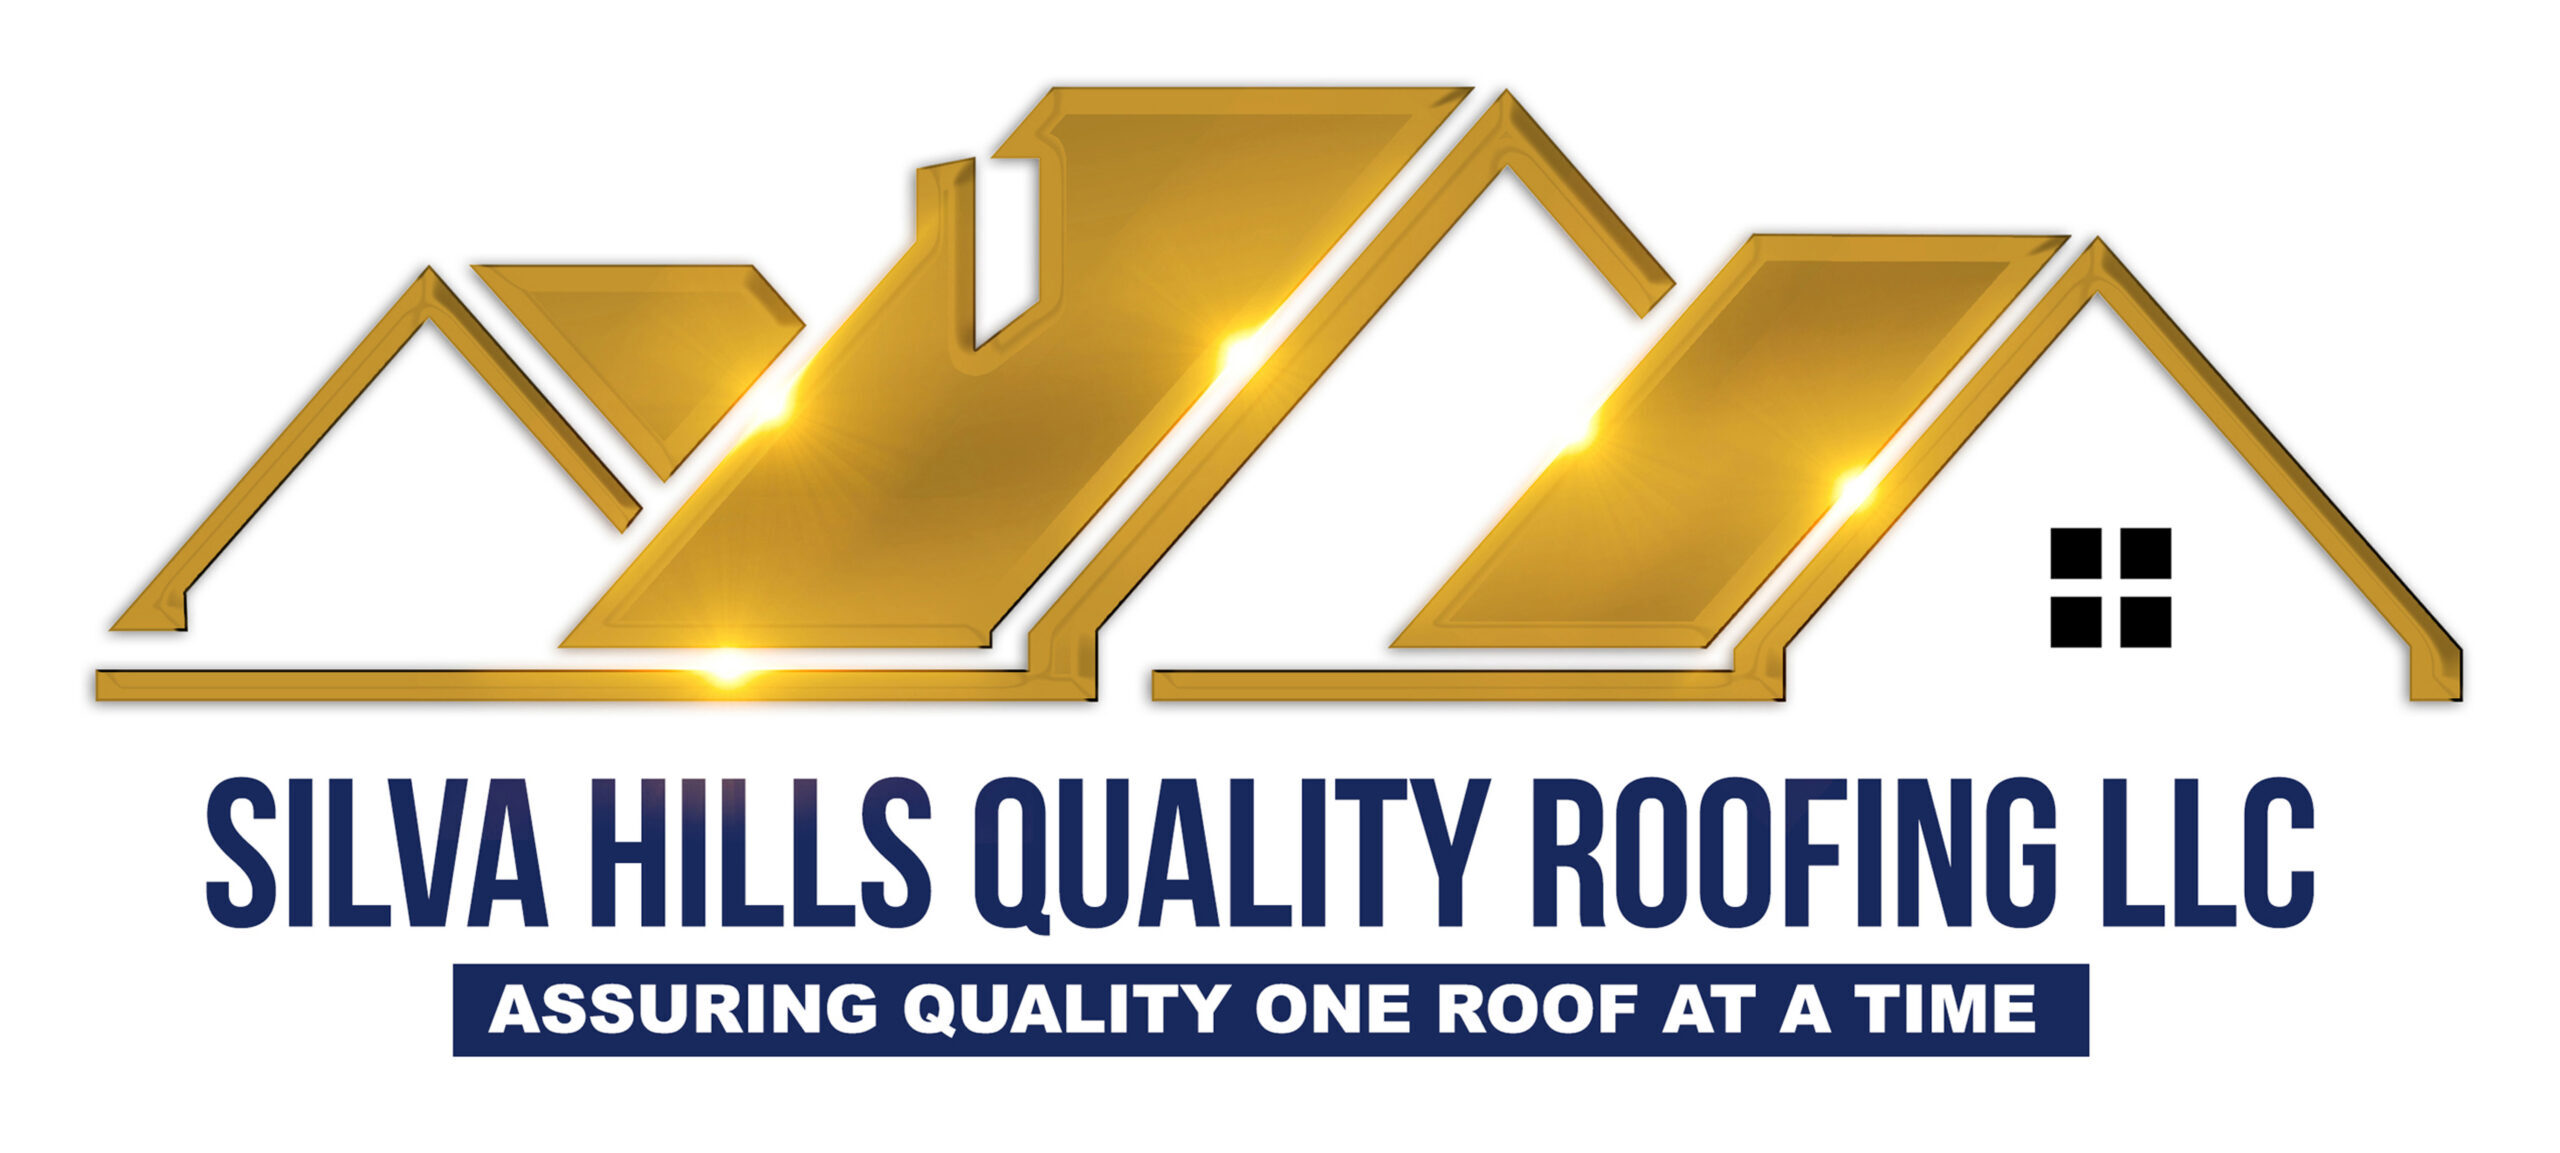 Silva Hills Quality Roofing